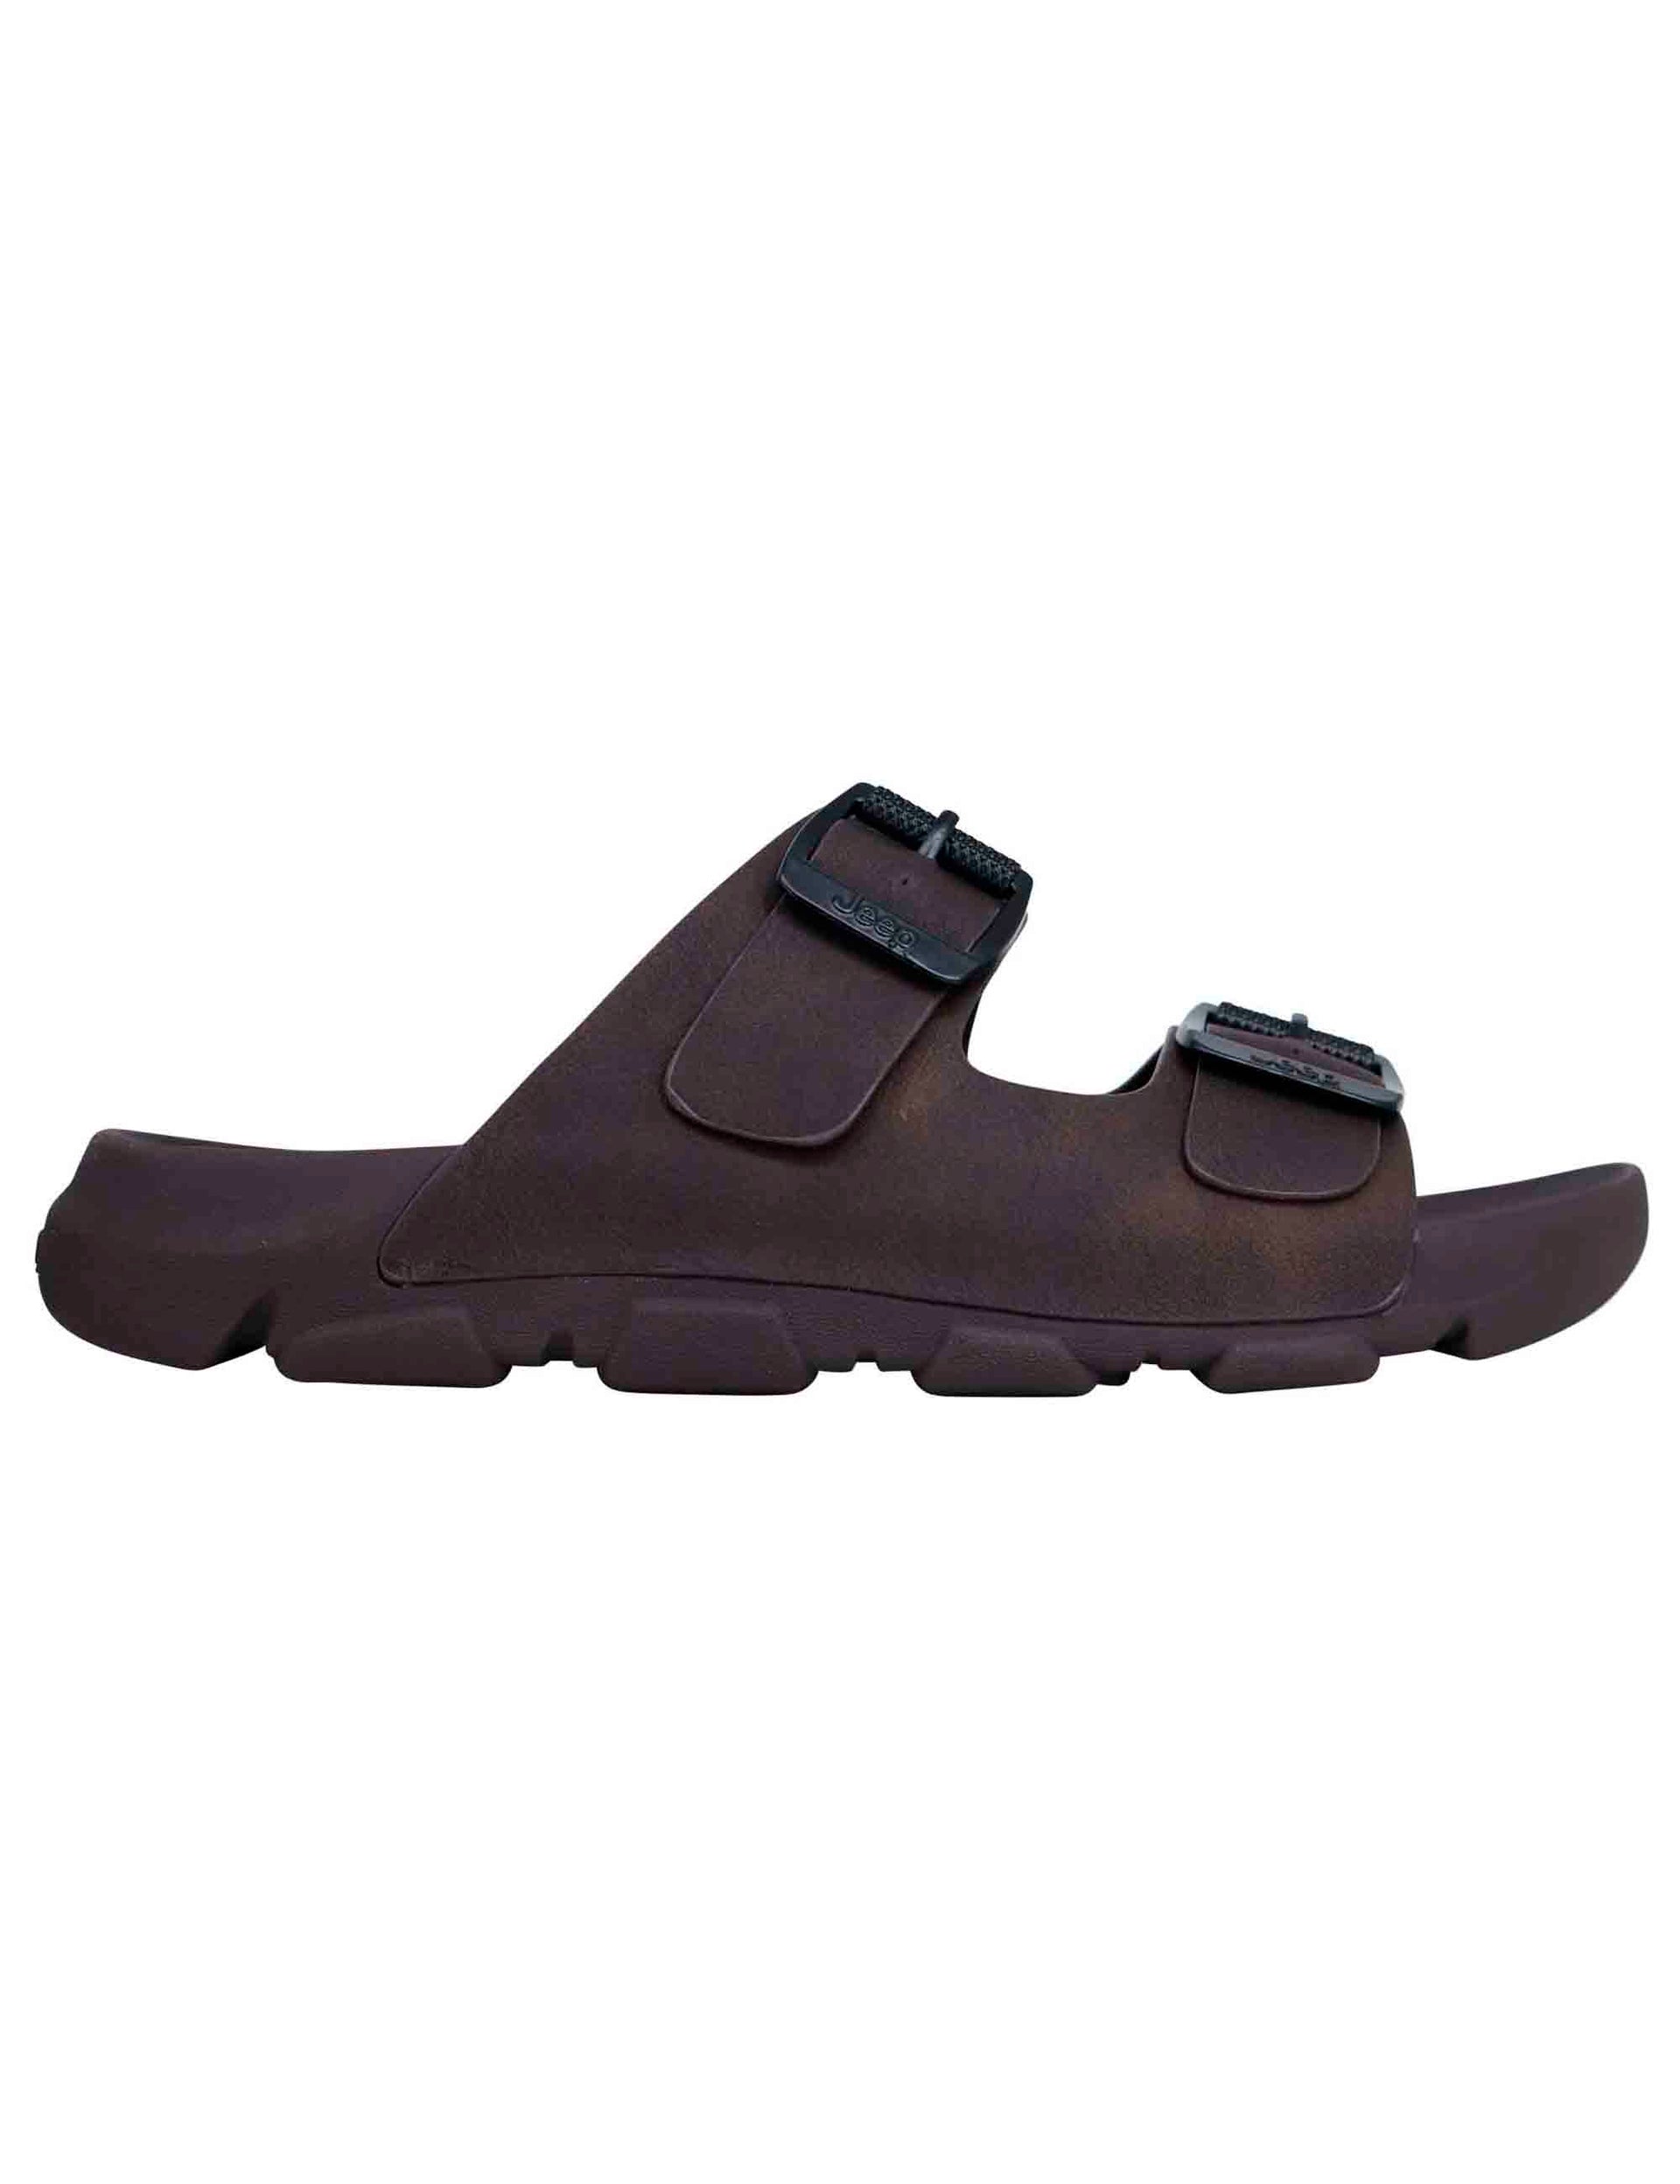 Daytona men's sandals in dark brown leather